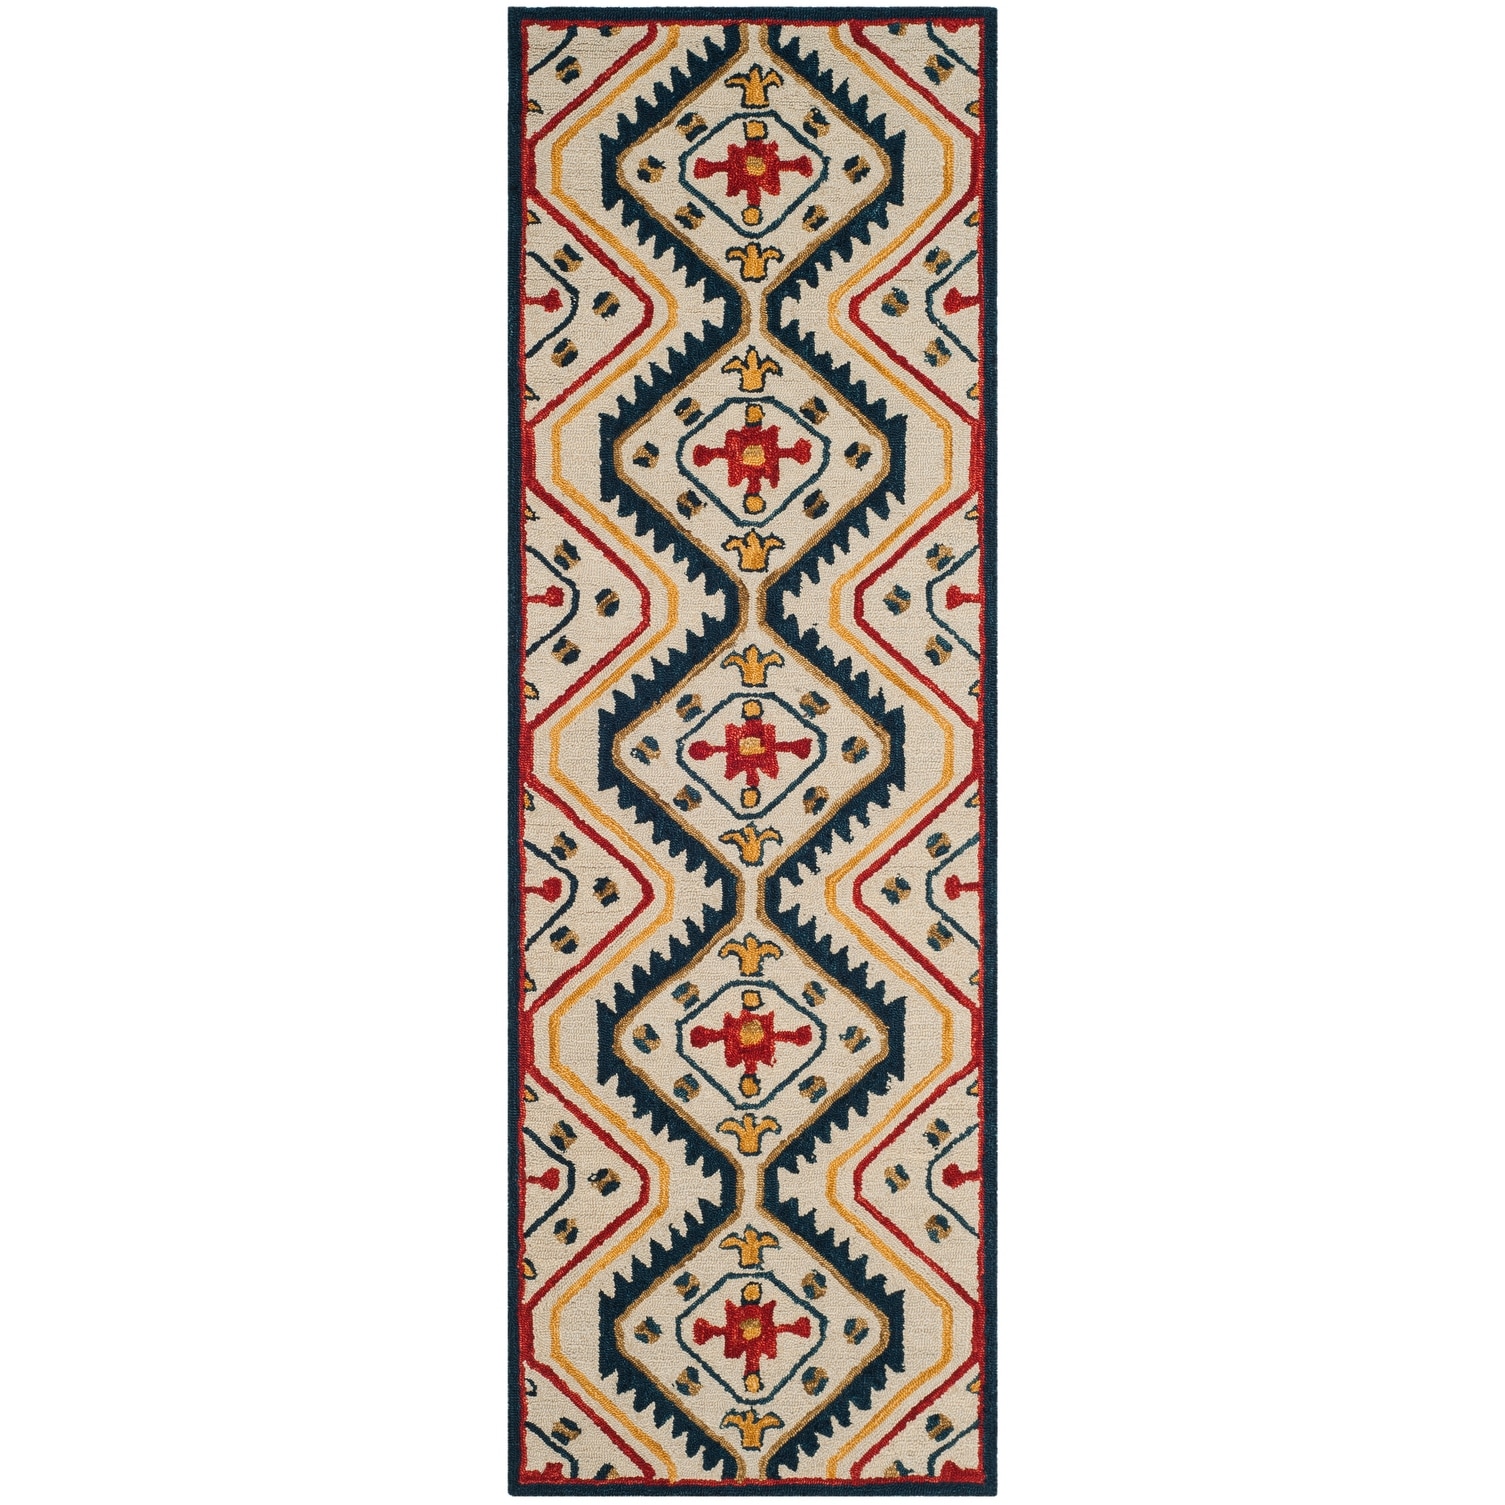 Safavieh Aspen Collection APN701A Handmade Moroccan Boho Tribal Wool Runner Multi Ivory 2'3 x 9' 